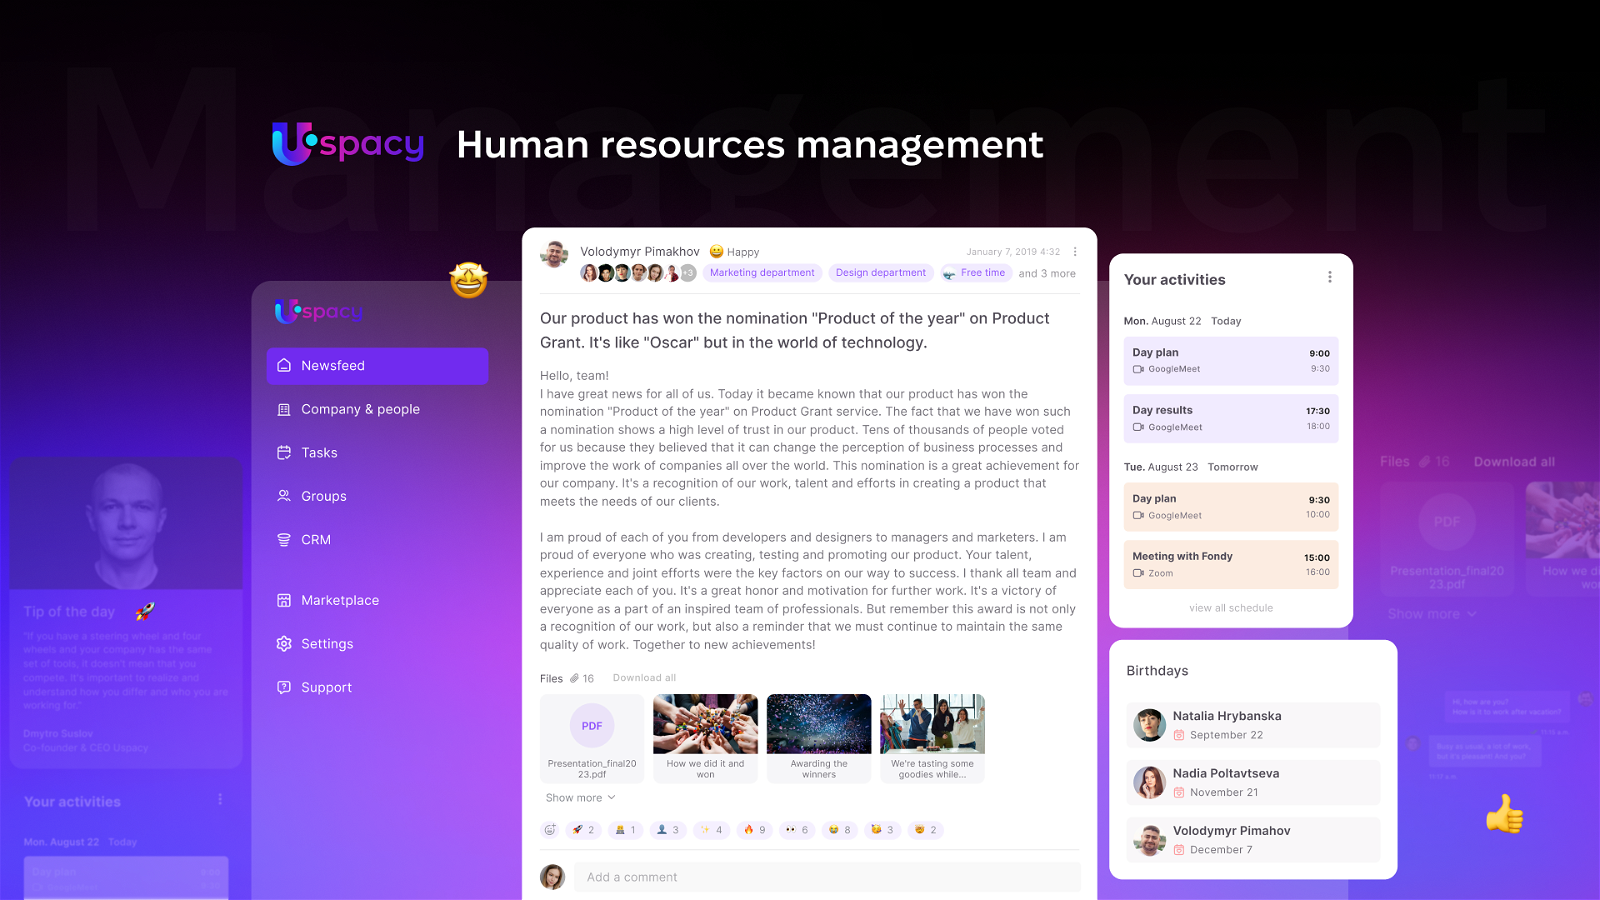 Human resources management